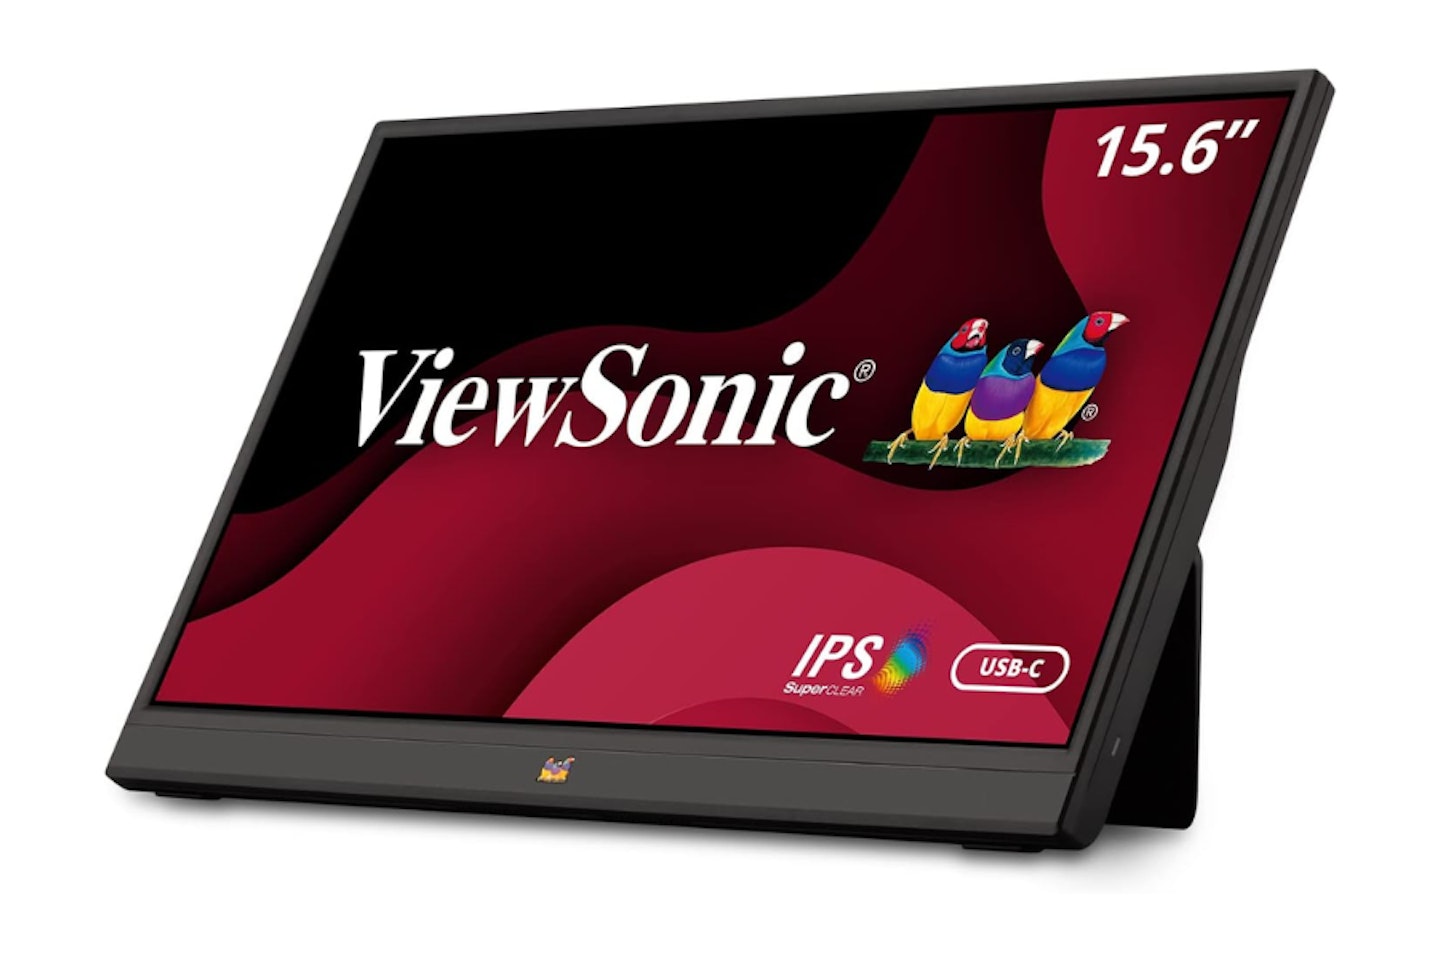 Viewsonic VA1655  - one of the best portable monitors